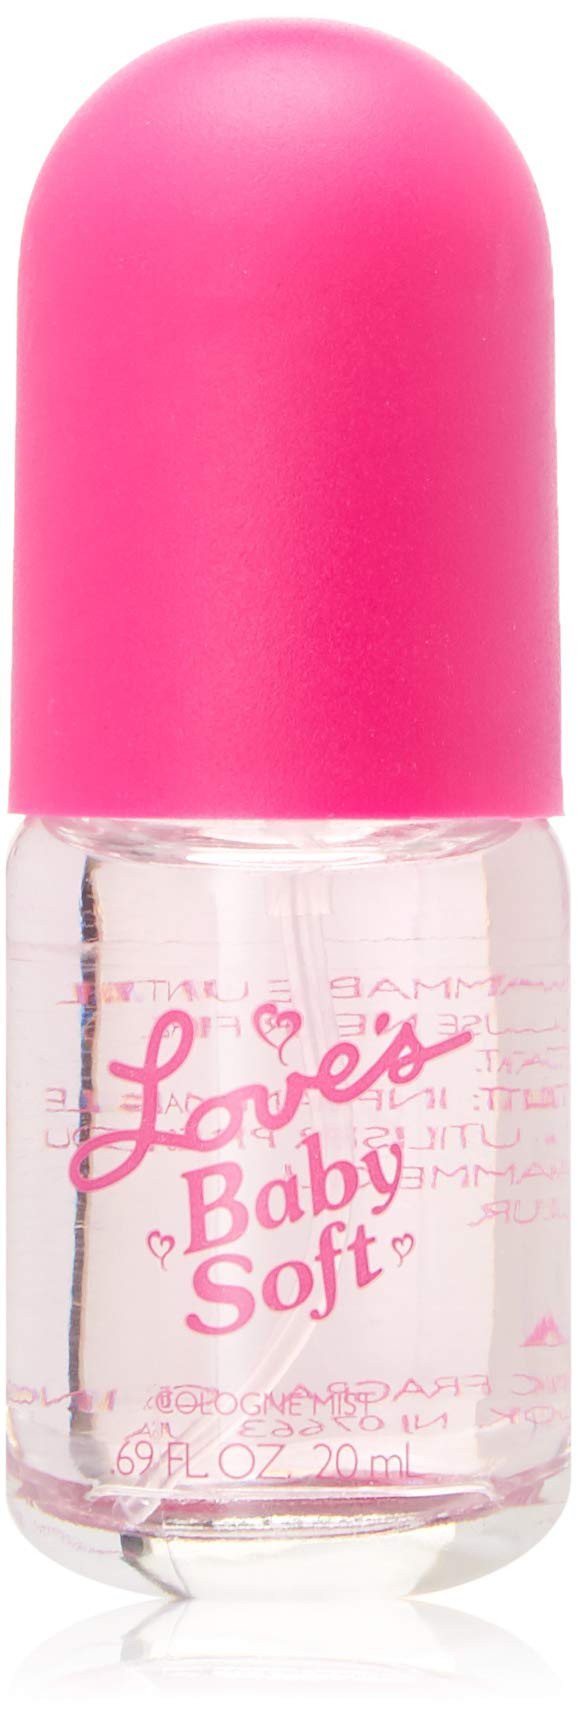 Baby Soft Perfume Gift Sets
 Amazon Dana Loves Baby Soft Cologne Spray 1 Ounce